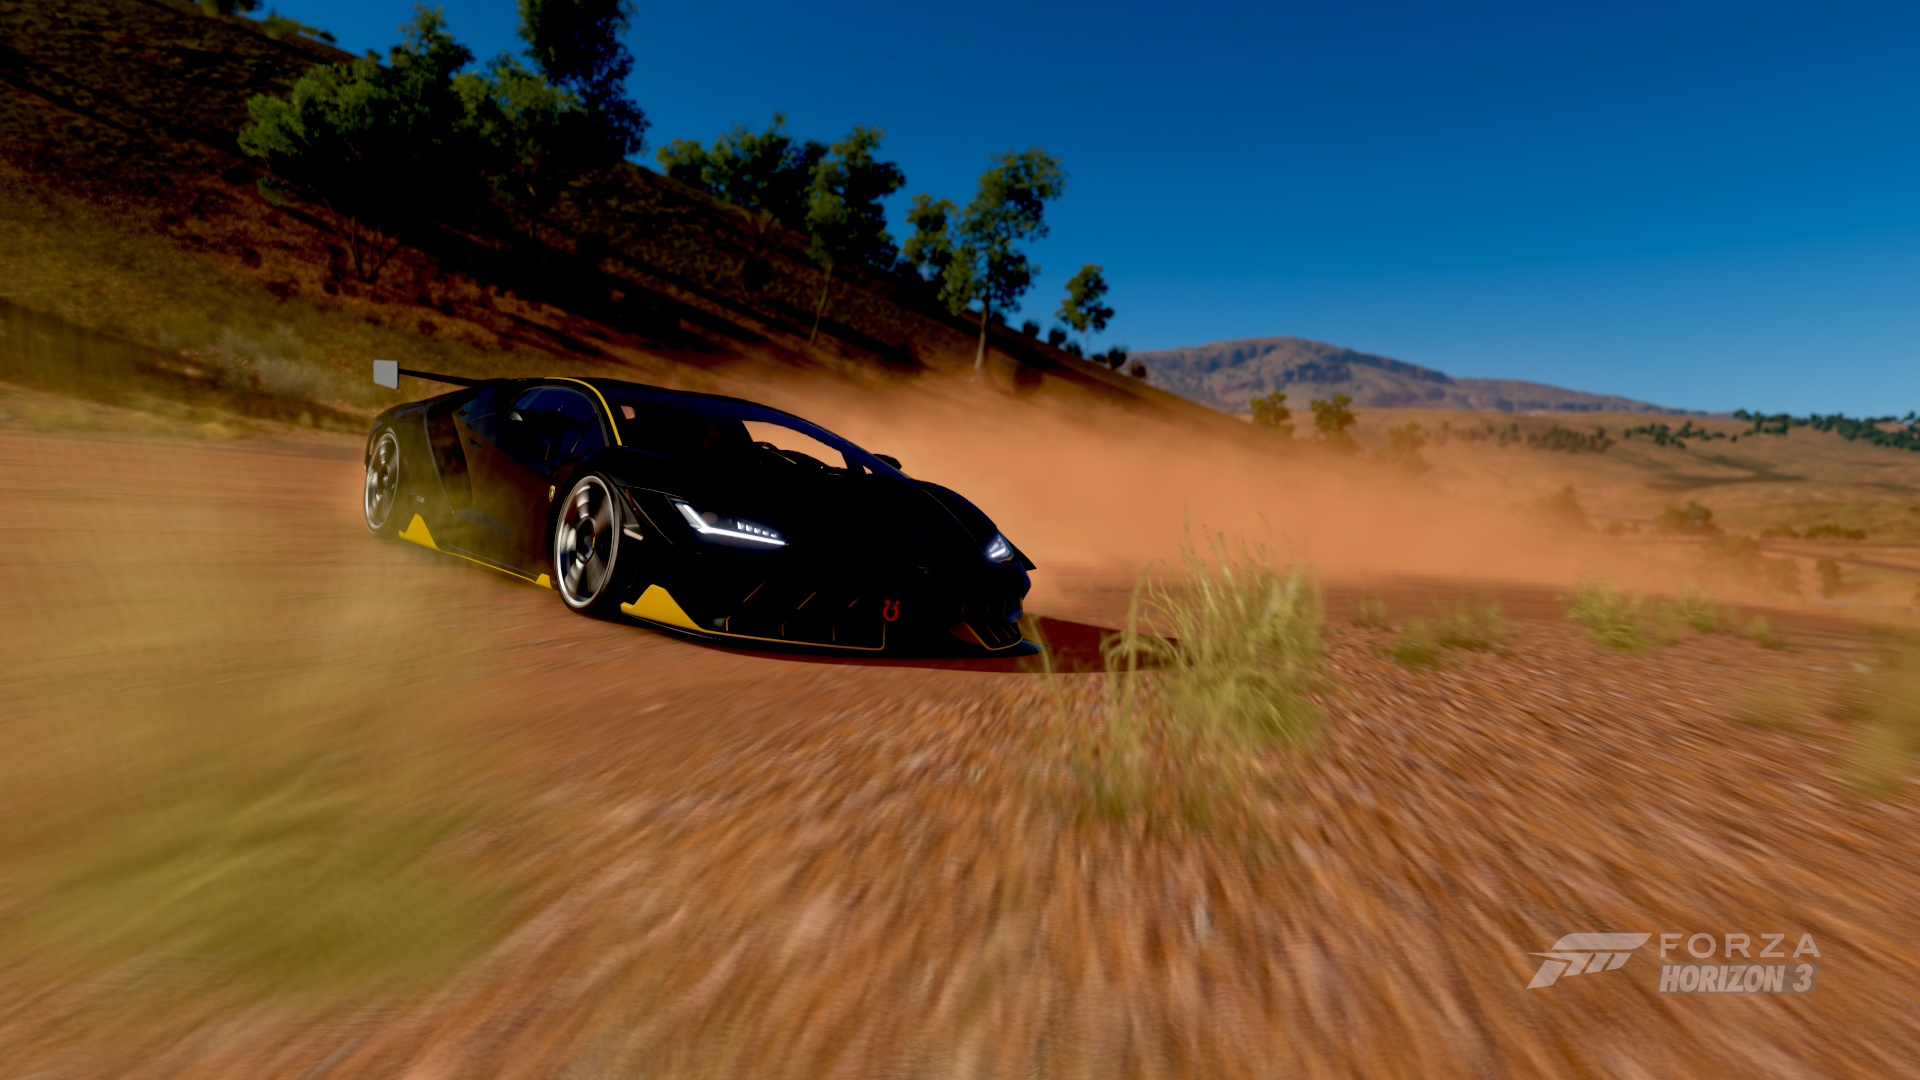 Car Forza Horizon 3 Lamborghini Centenario Video Game 1920x1080